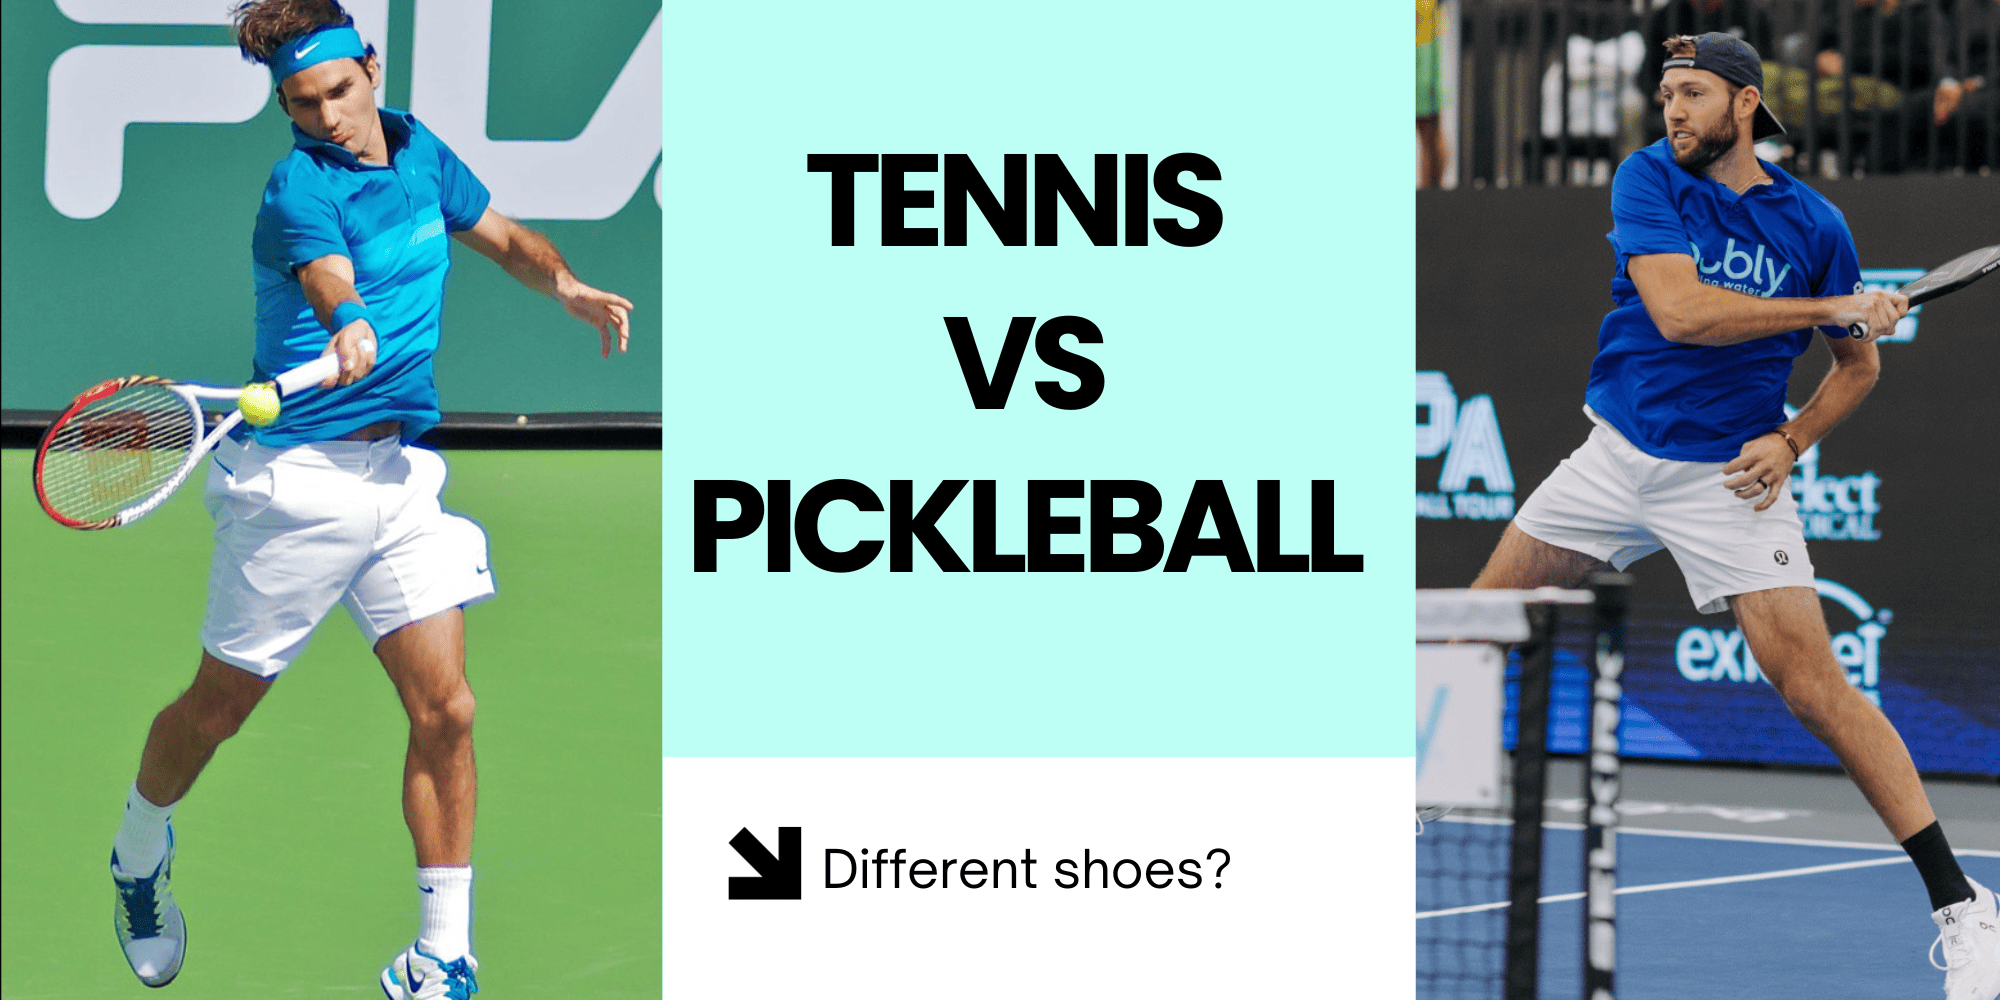 Tennis shoes vs Pickleball Shoes